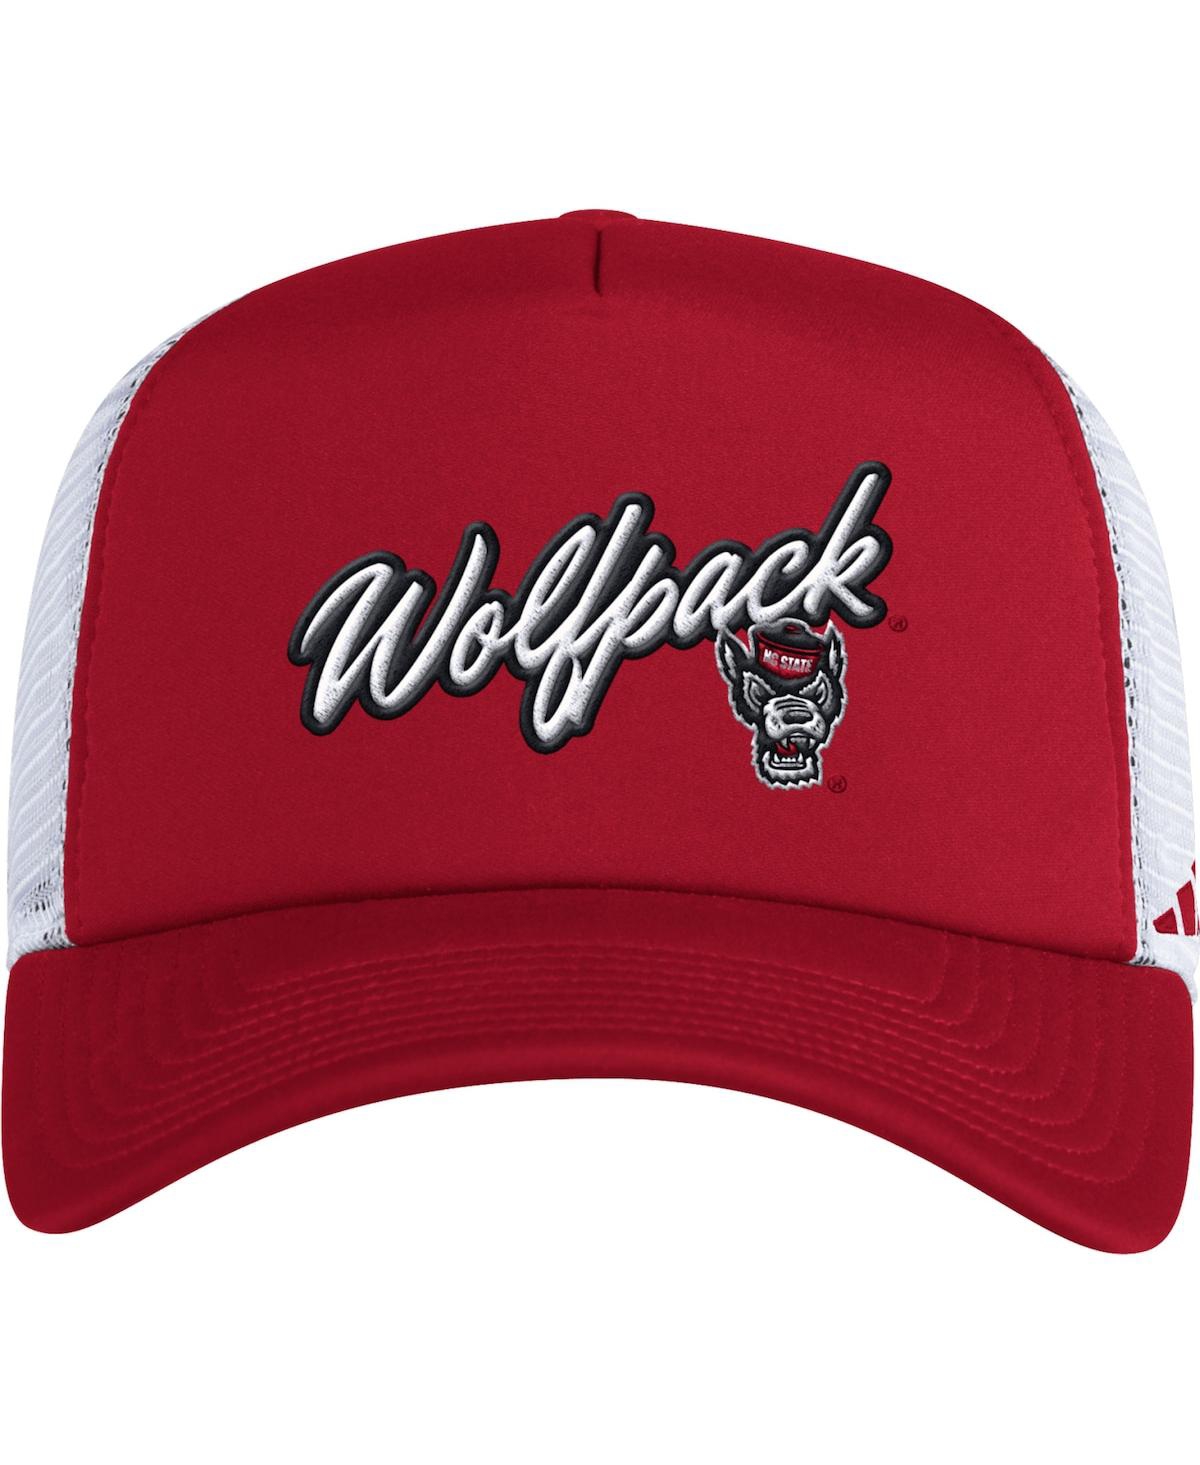 Adidas Originals Men's Adidas Red Nc State Wolfpack Script Trucker Snapback Hat